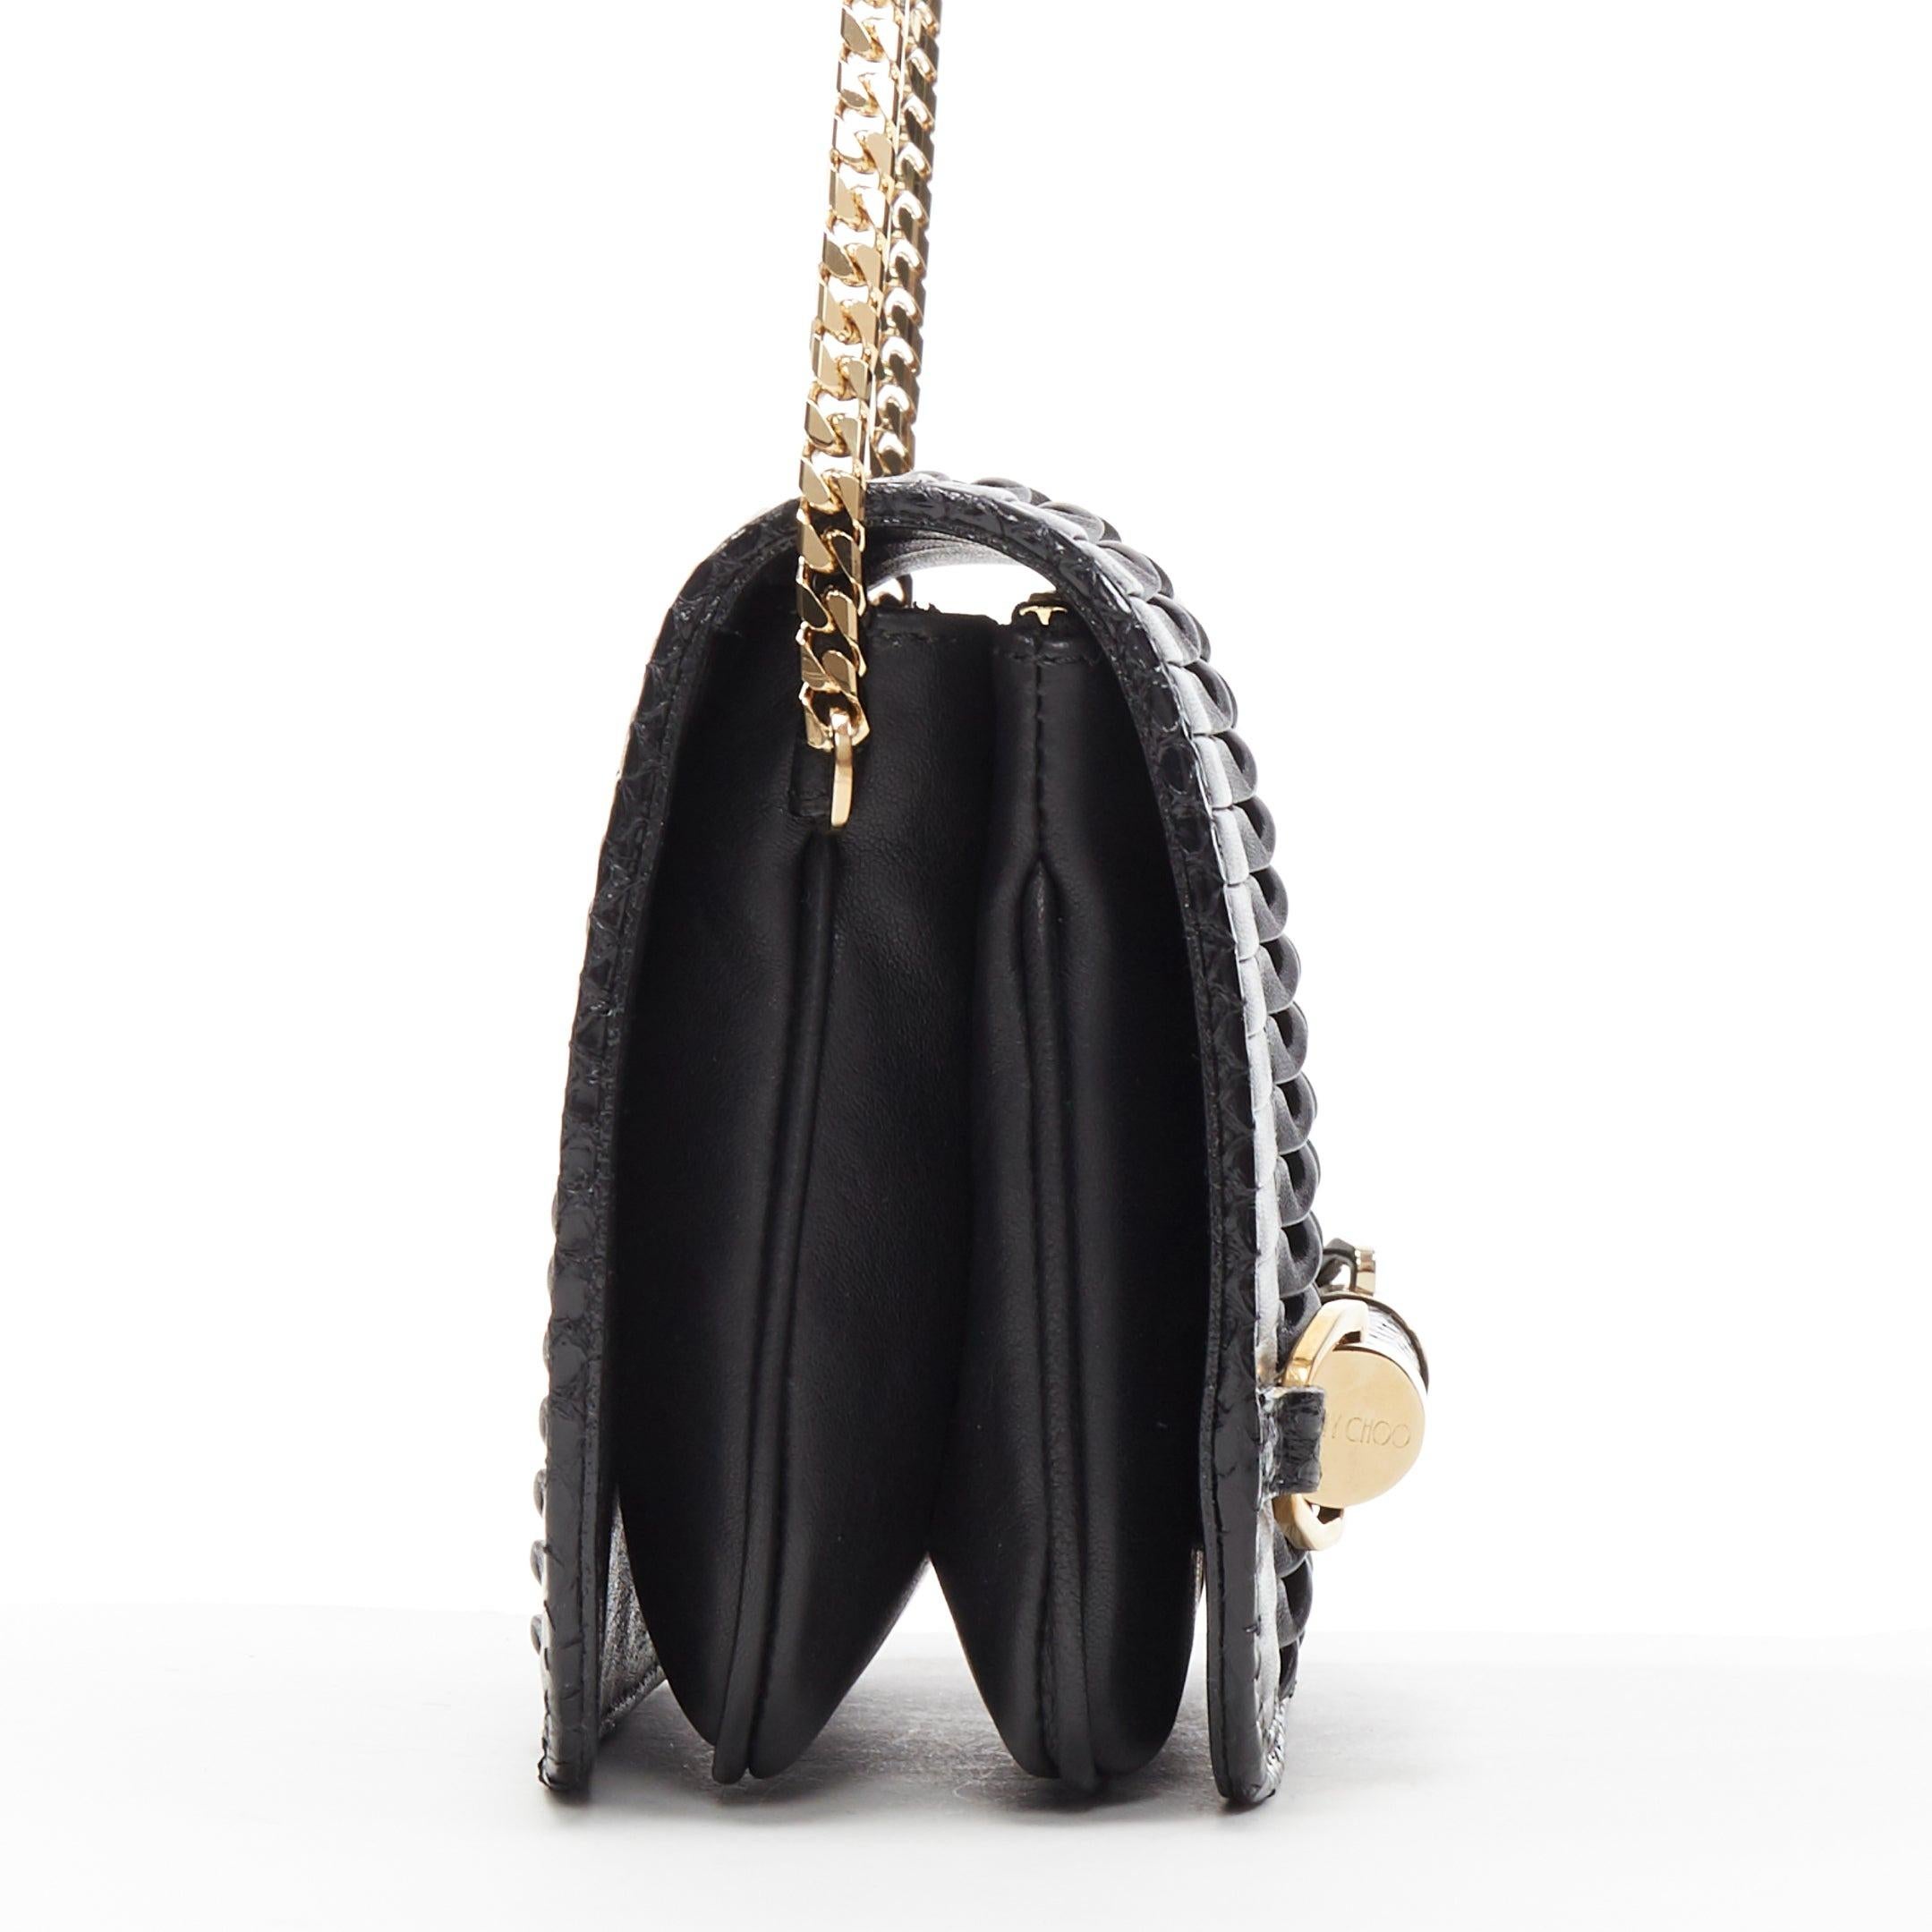 Black JIMMY CHOO black woven pleated leather gold bar detail flap crossbody bag